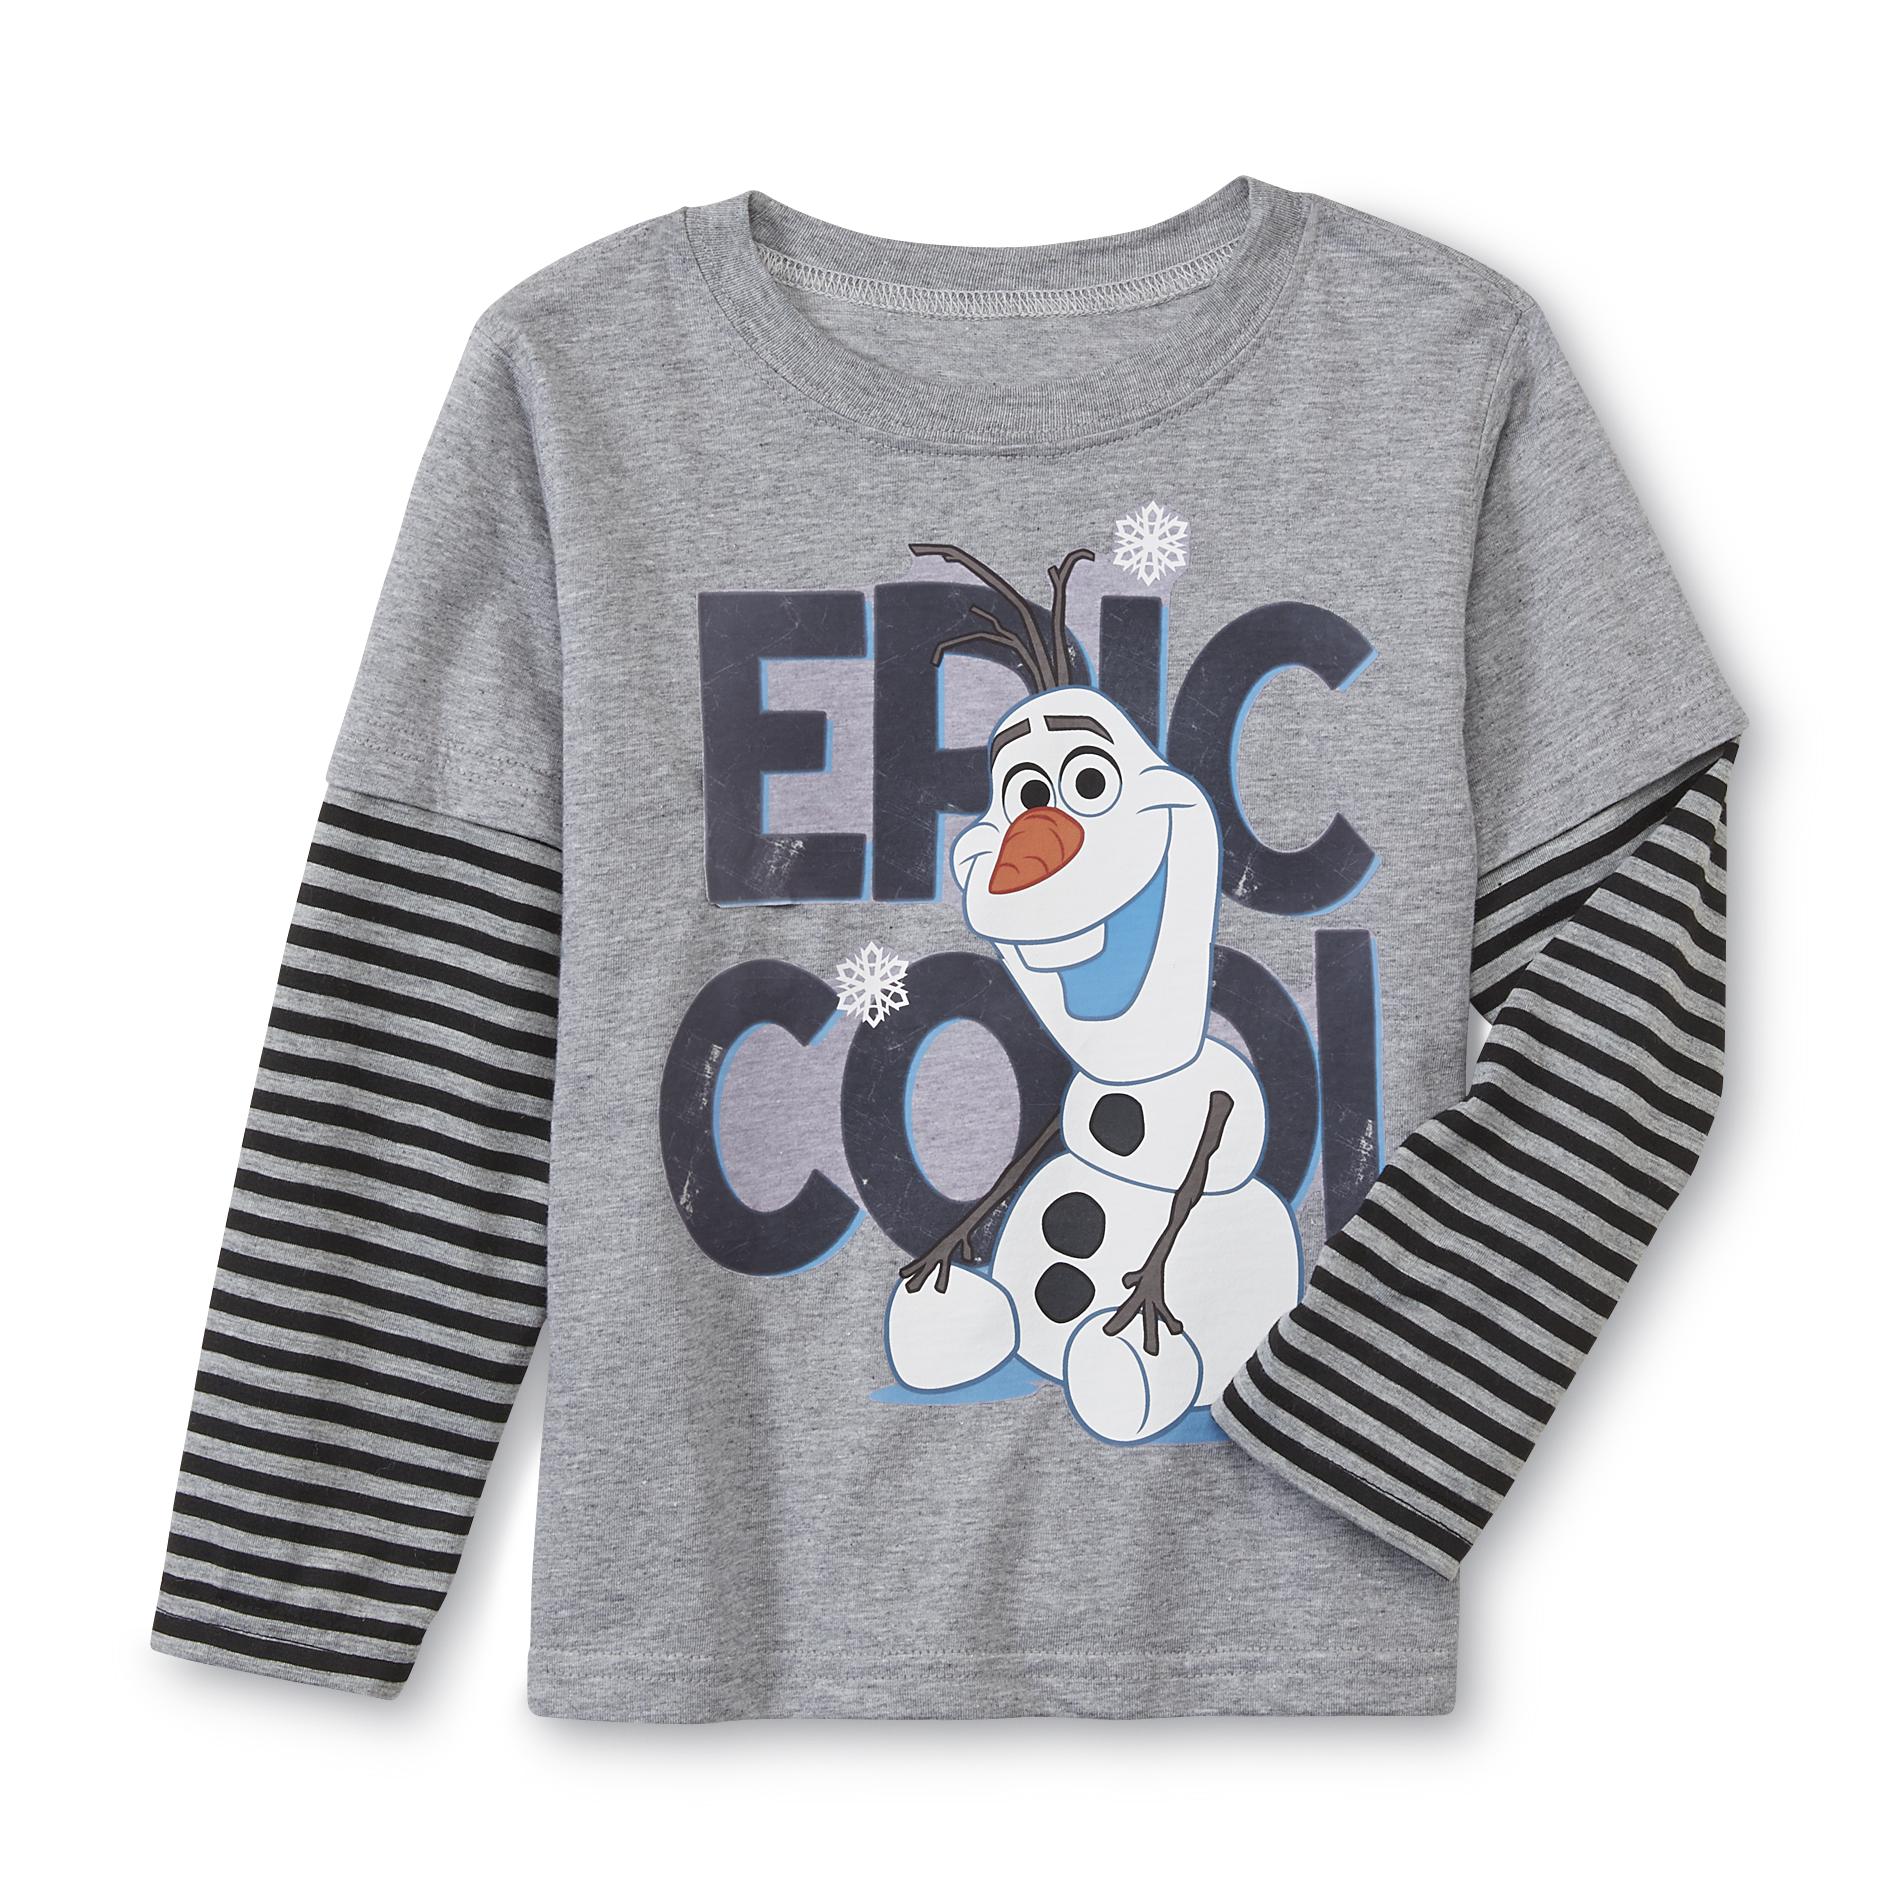 Disney Frozen Toddler Boy's T-Shirt - Olaf